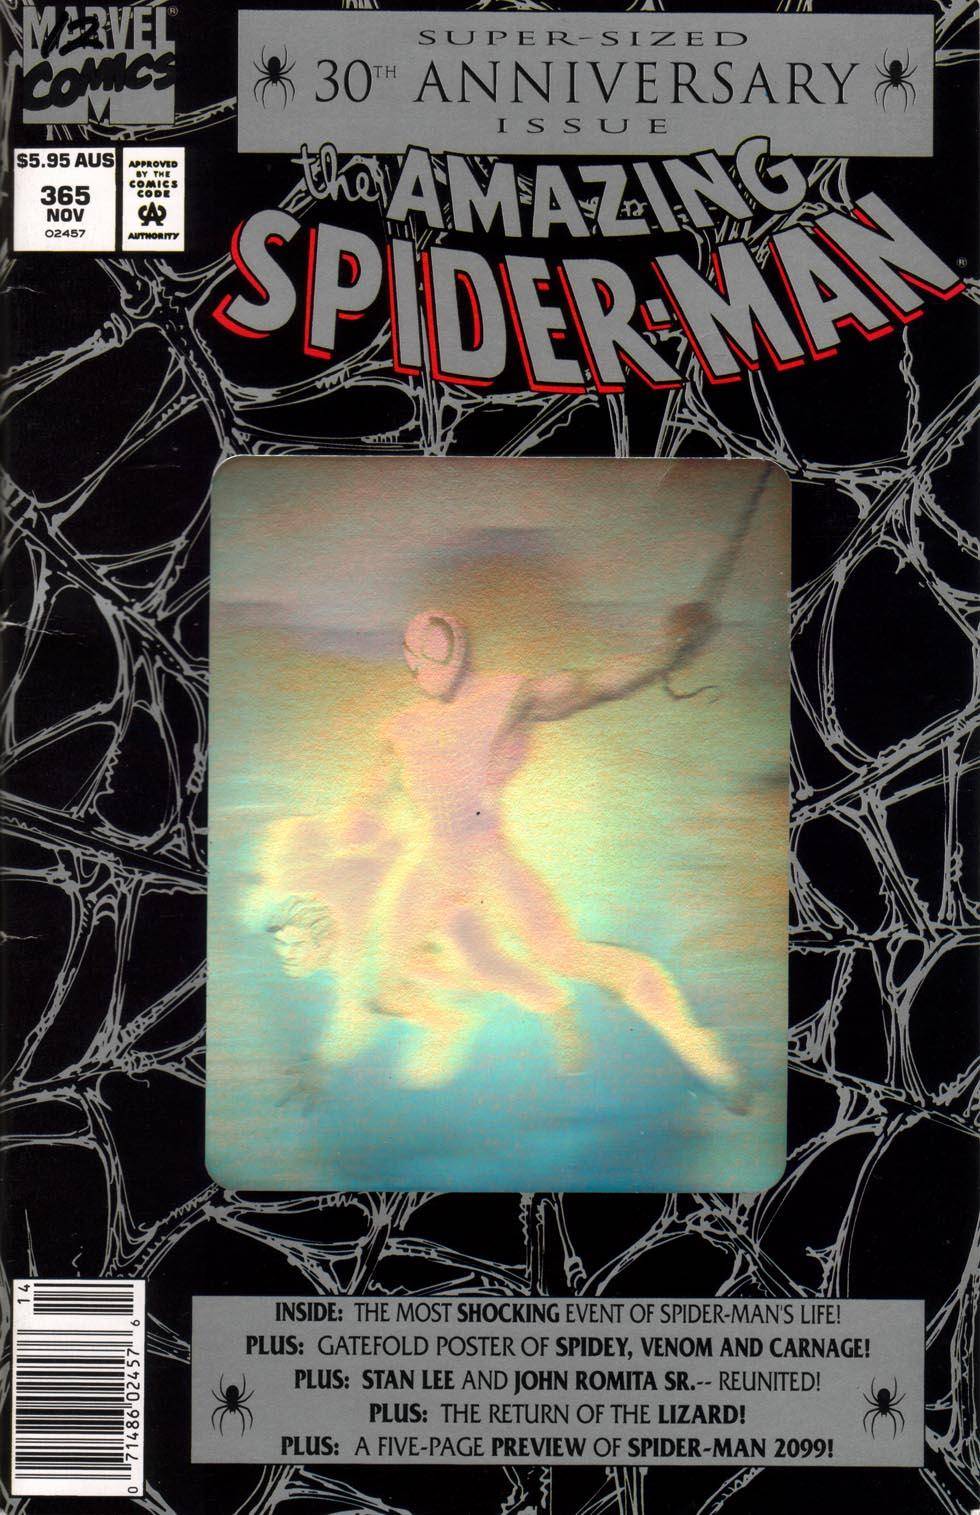 For PostalPops Amazing Spider-Man 365 cbz